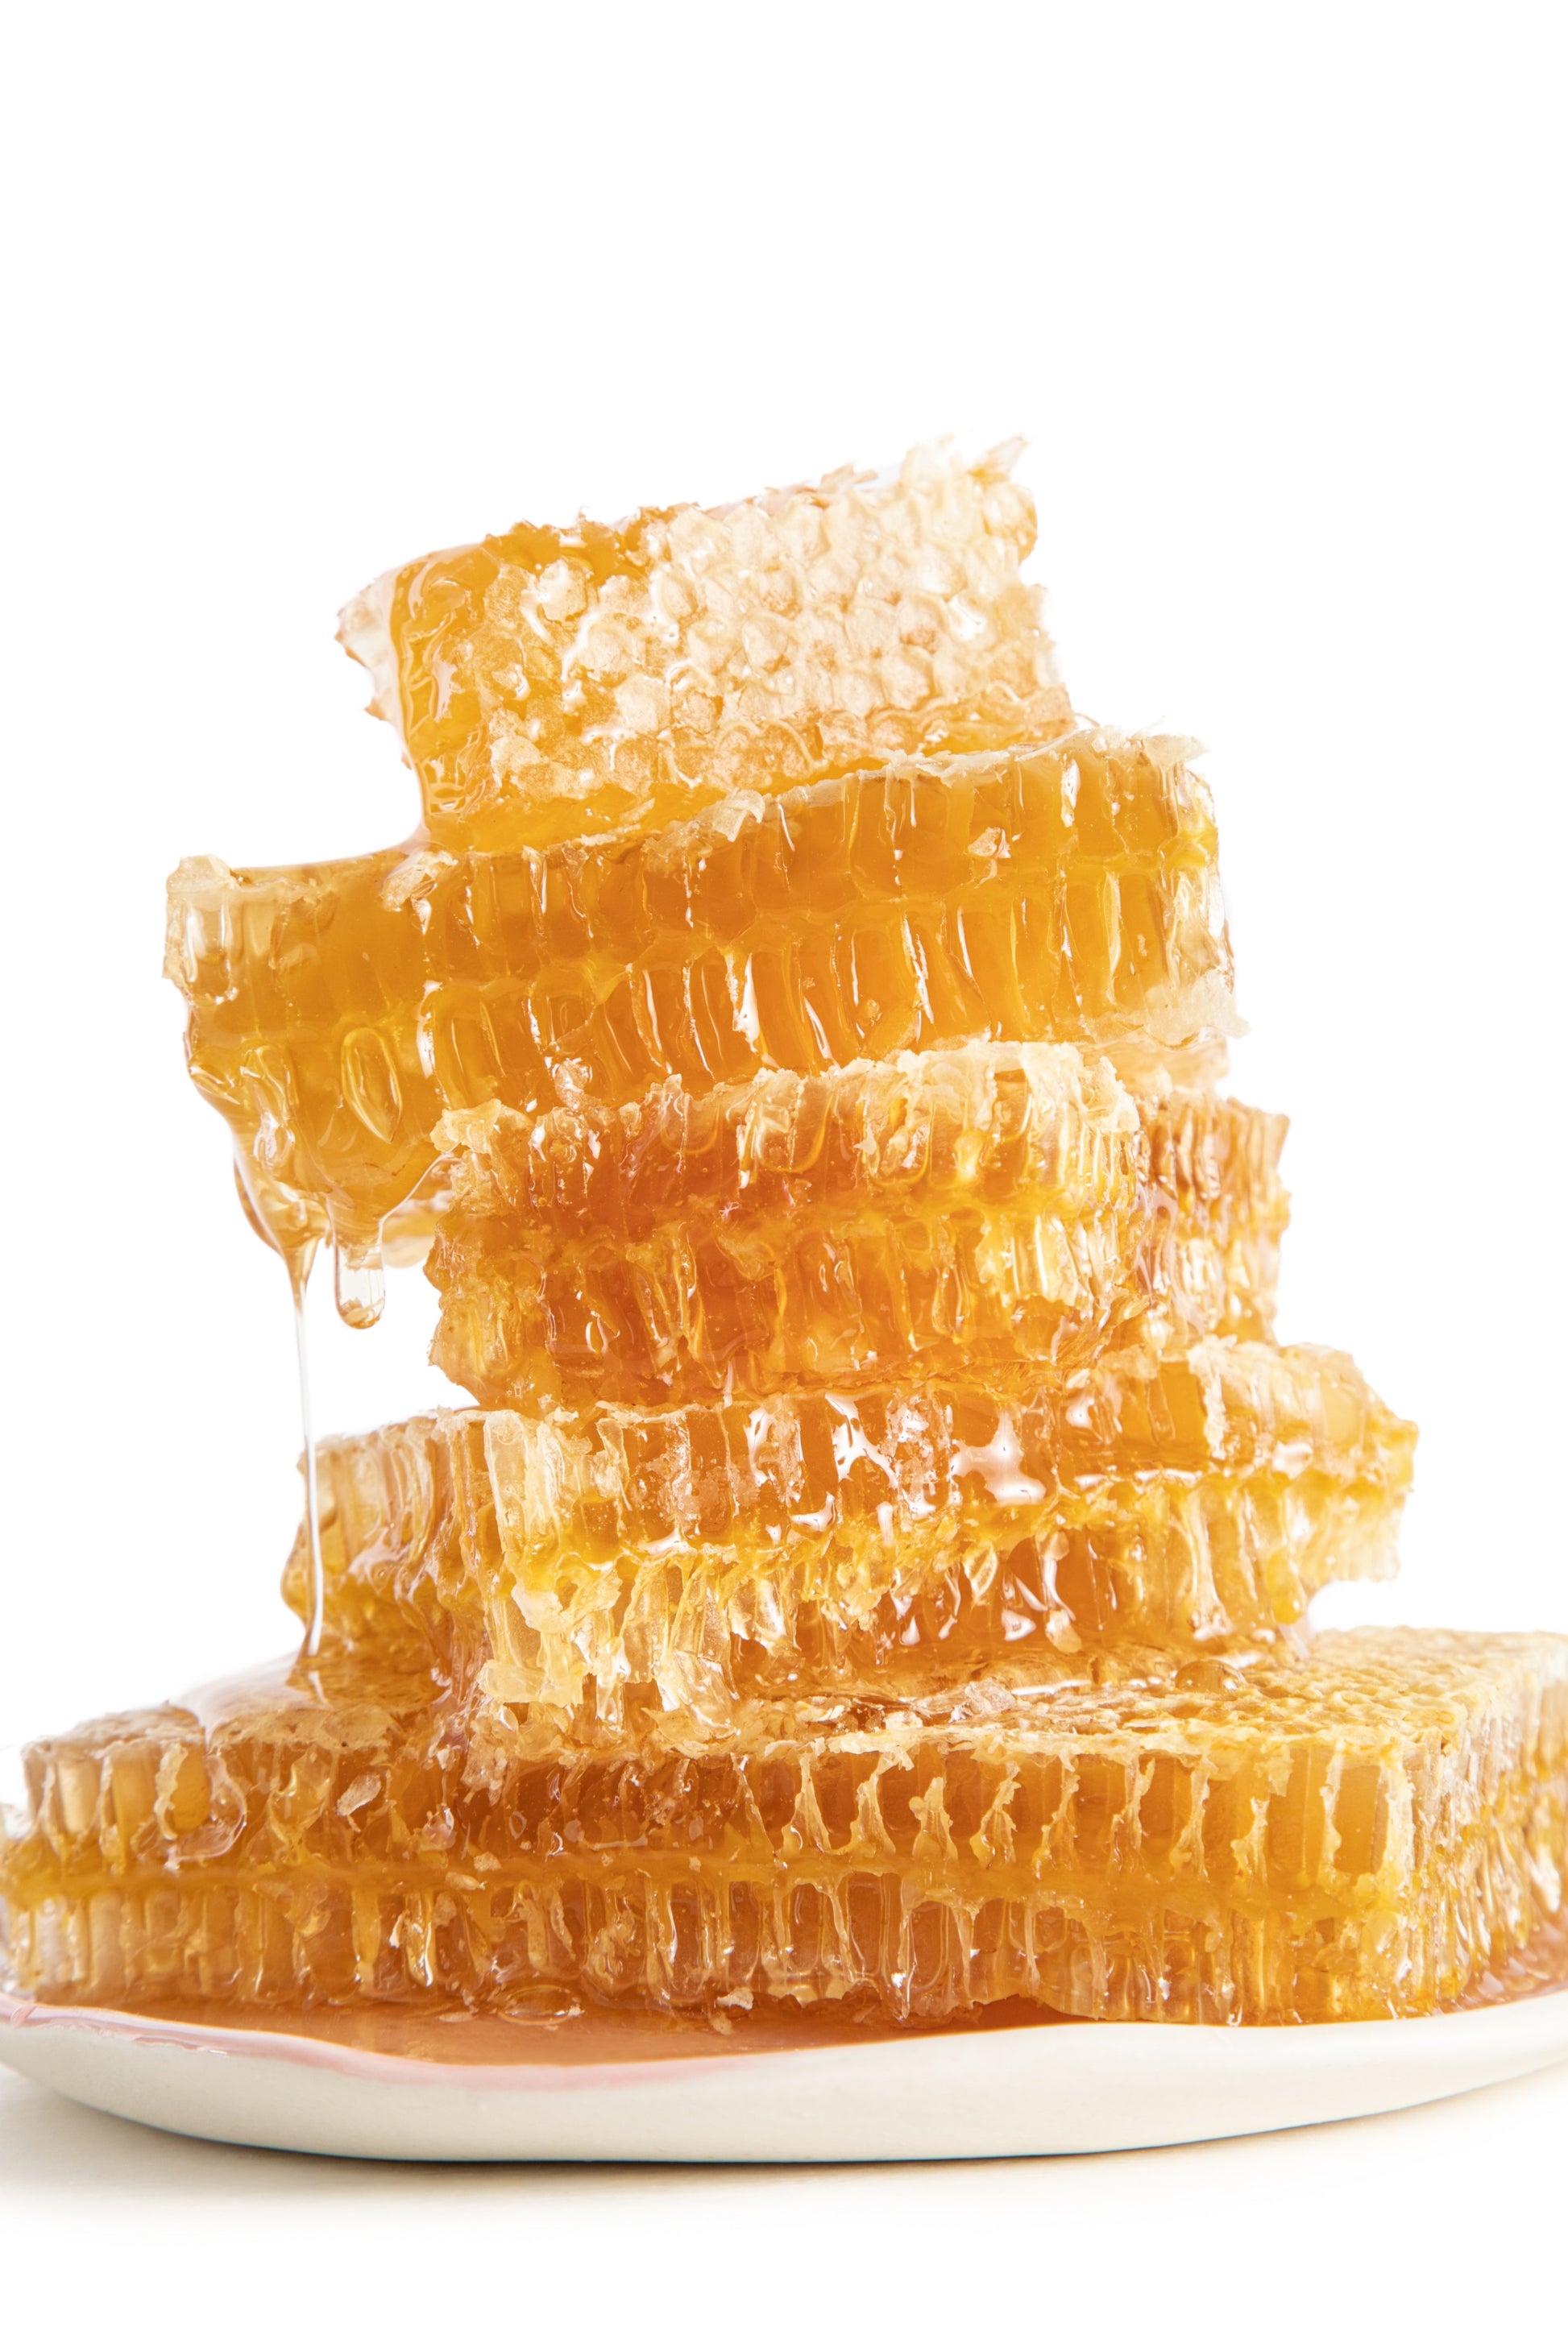 Savannah Bee Company Honeycomb, Raw - 5.6 oz